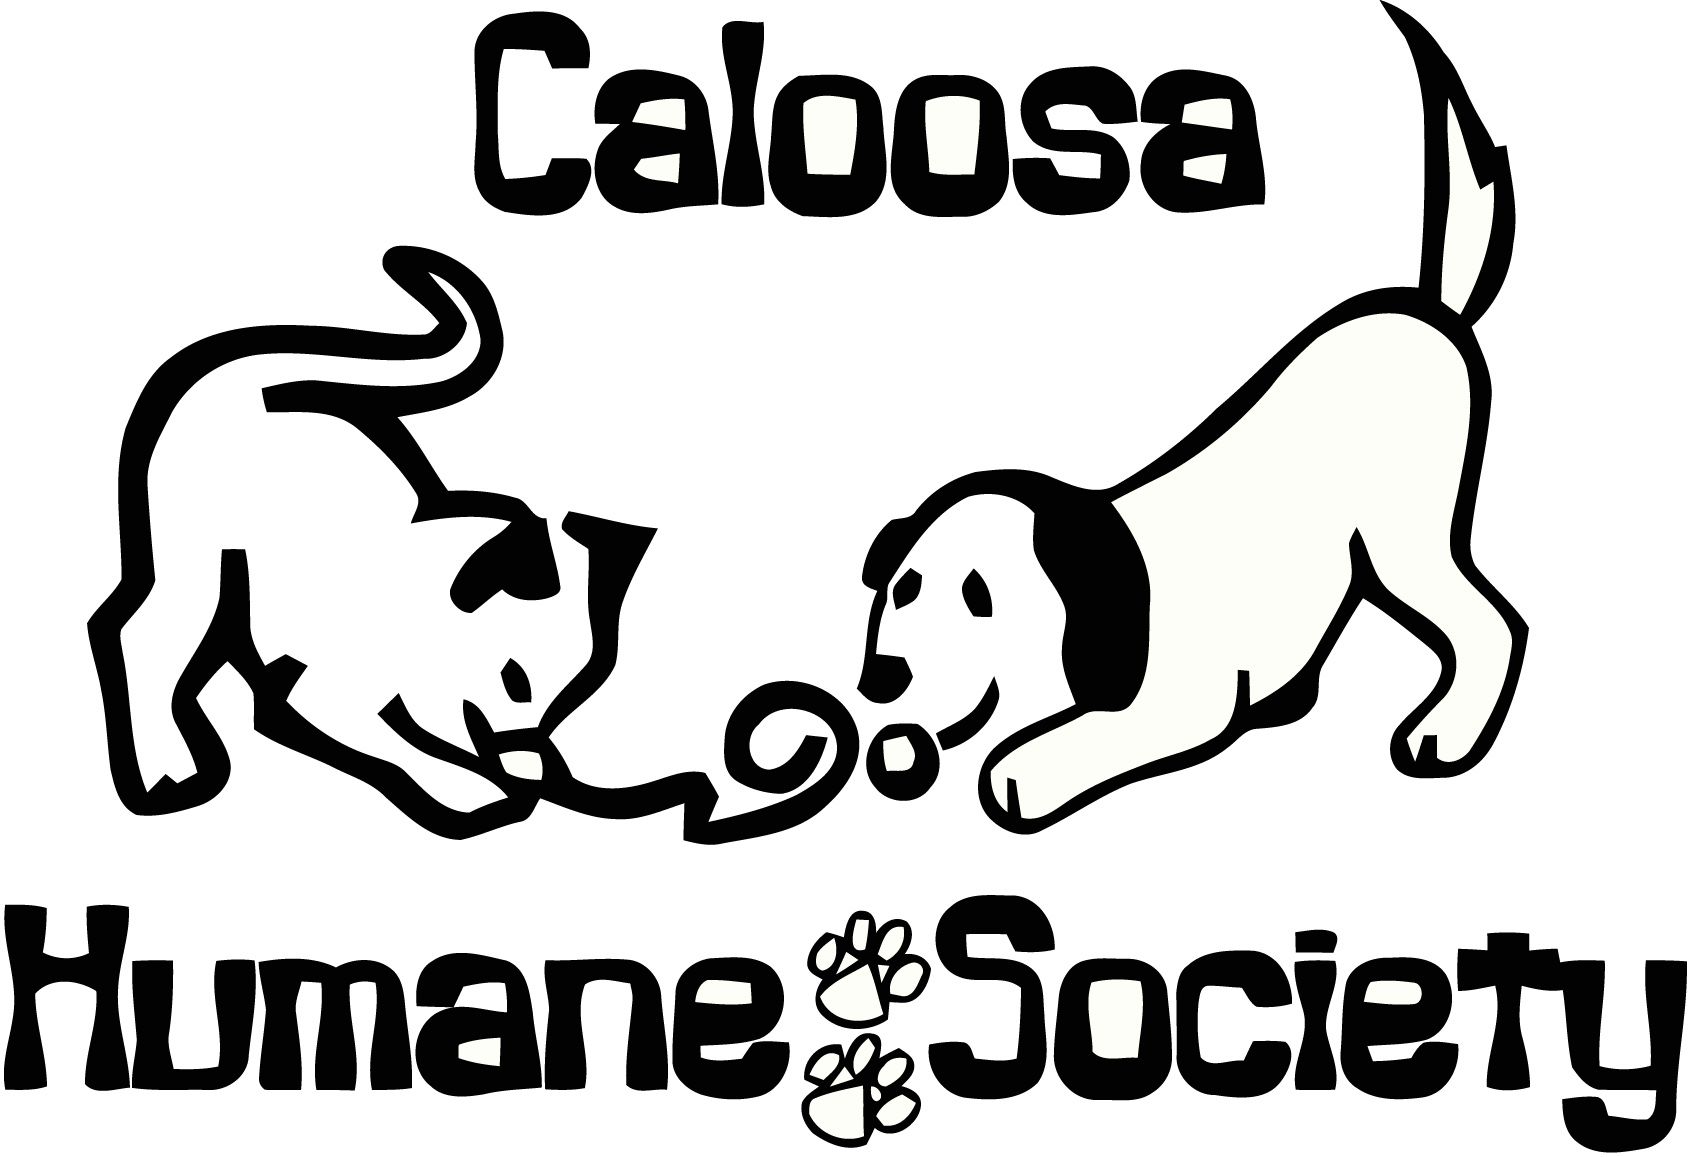 Caloosa Humane Society, Inc.